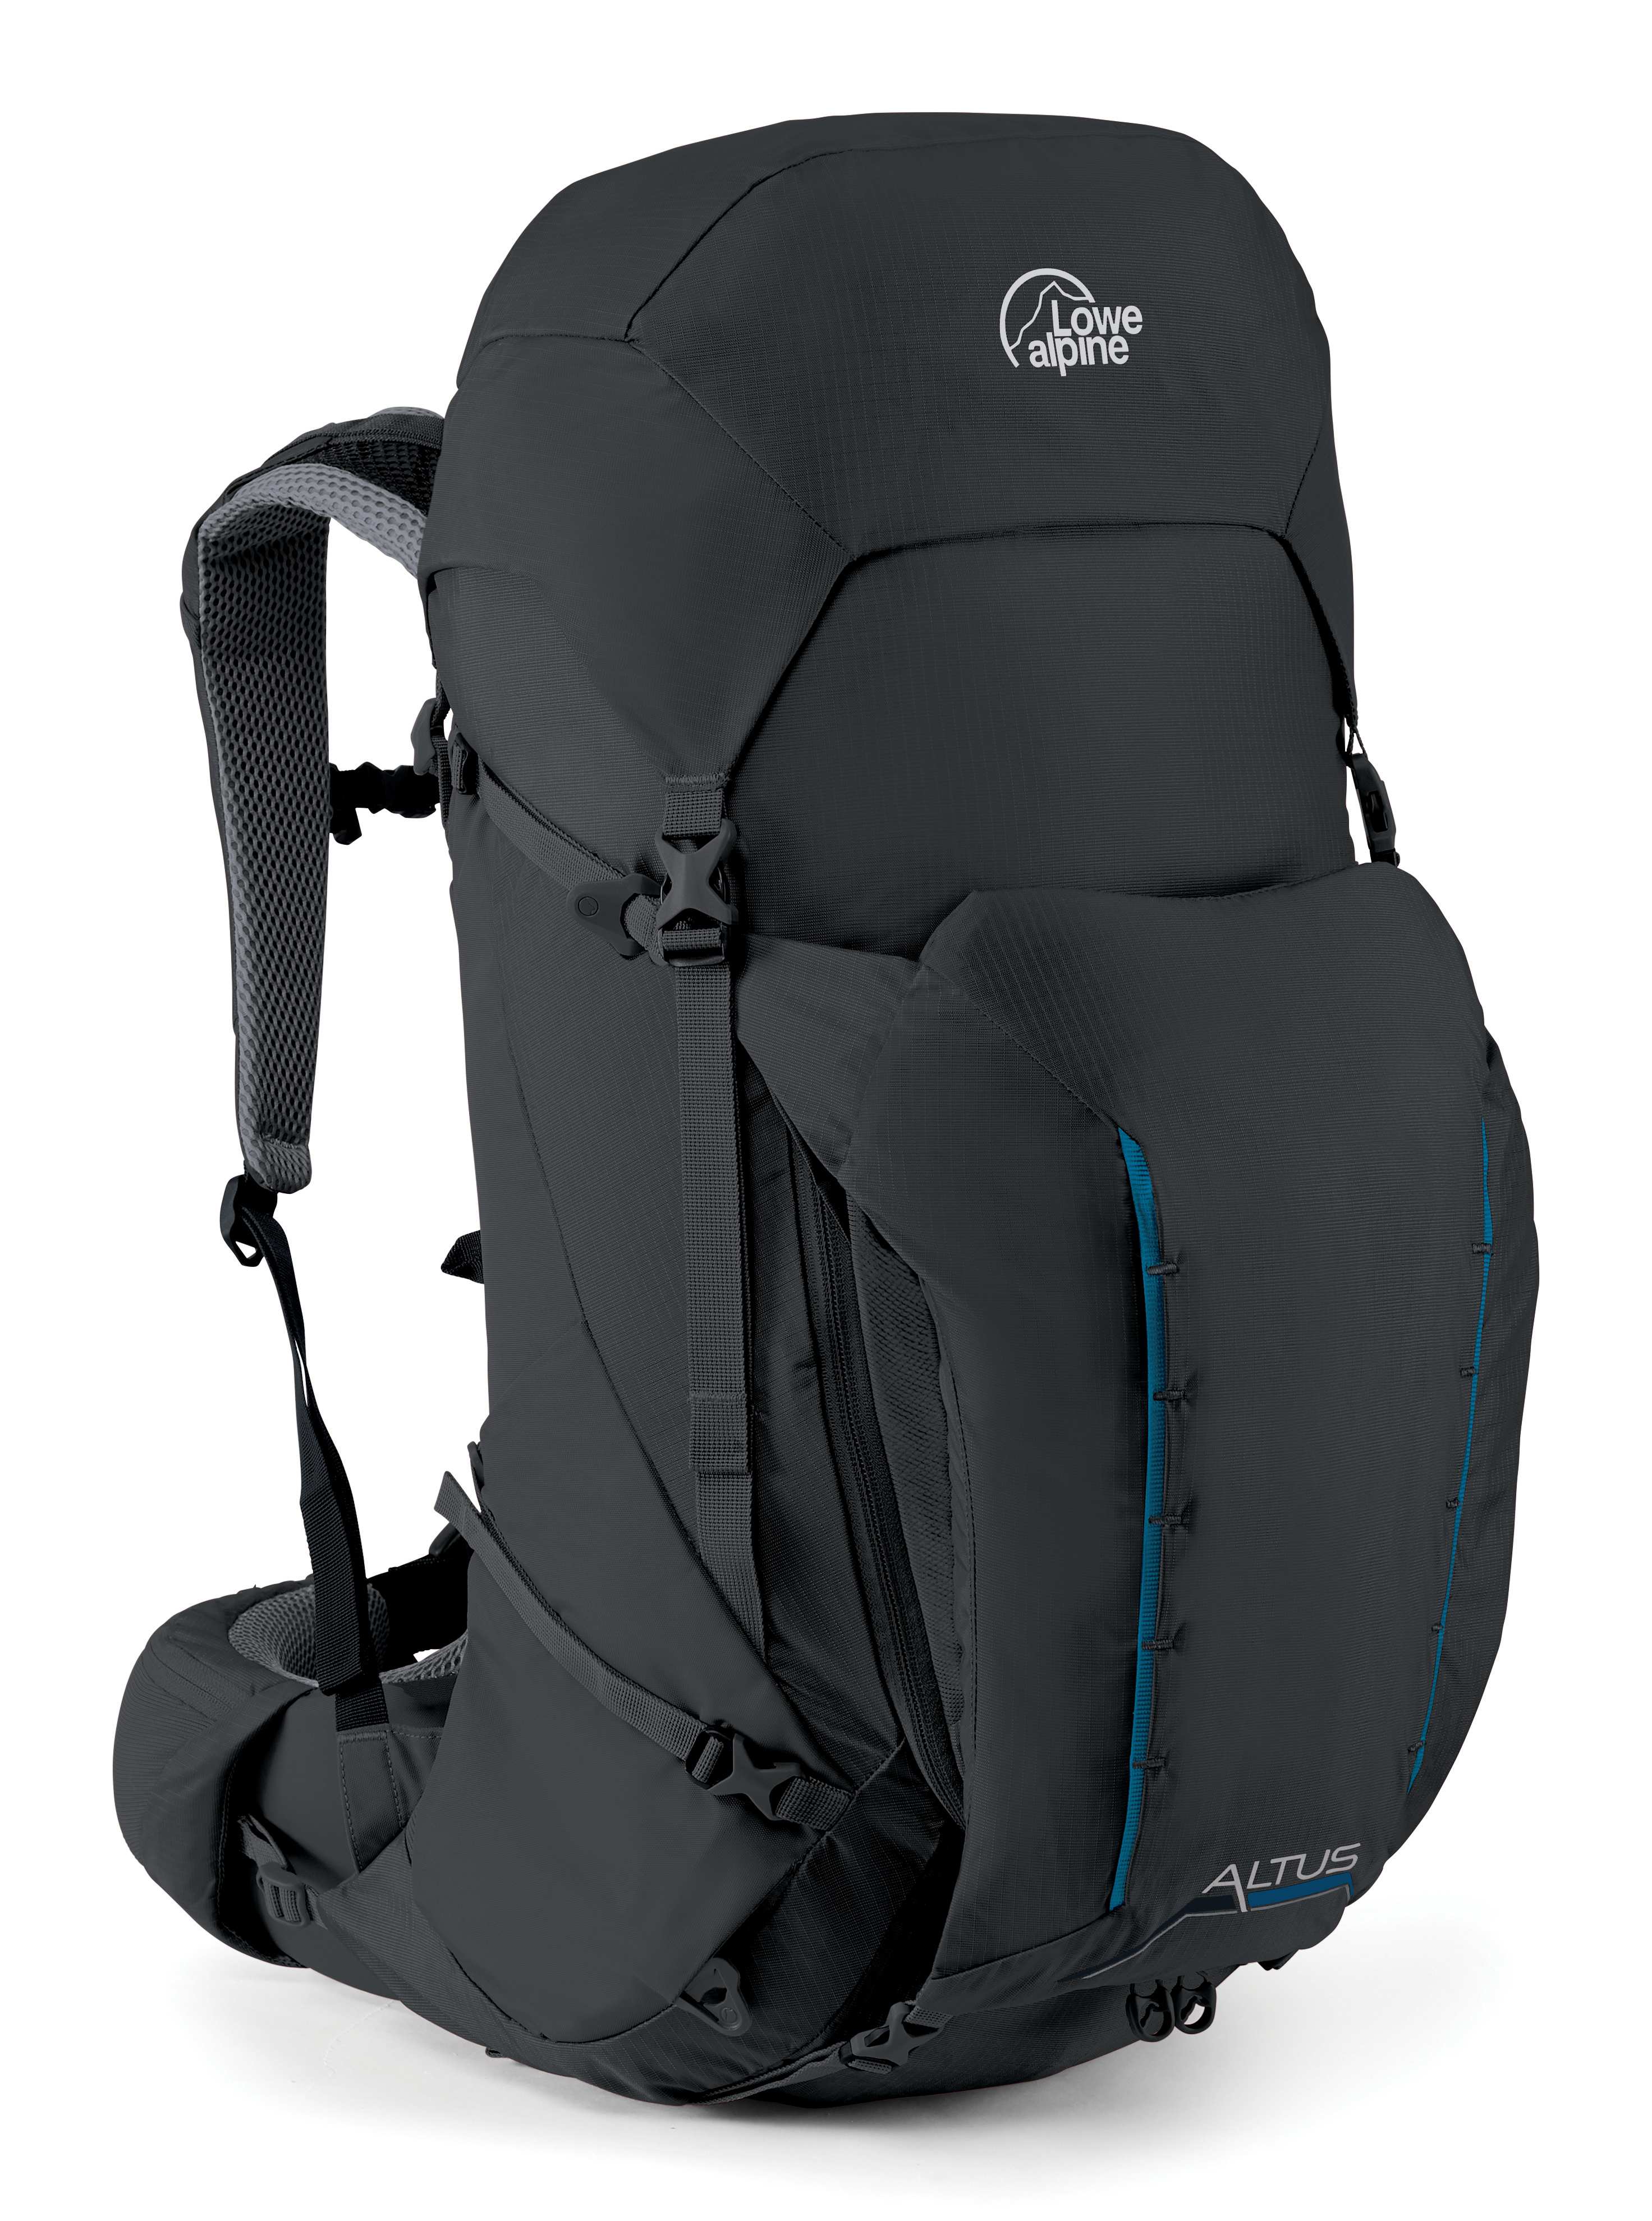 Lowe Alpine - Altus 42:47 - Hiking backpack - Men's